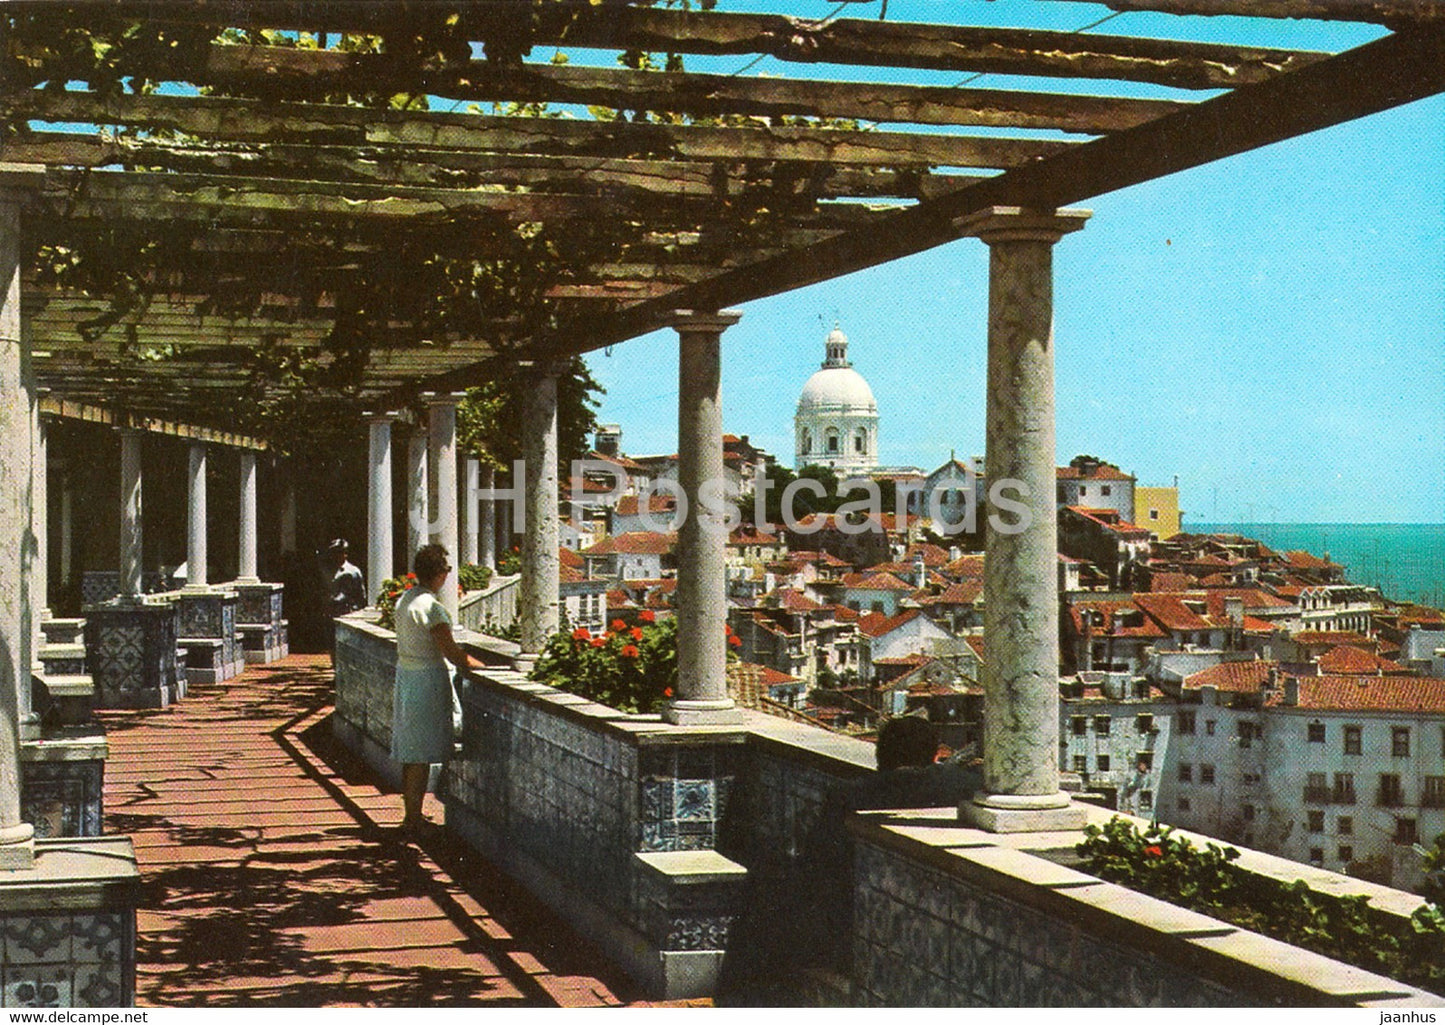 Lisbon - Lisboa - Miradouro de Sta Luzia - Belvedere - 428 - 1989 - Portugal - used - JH Postcards